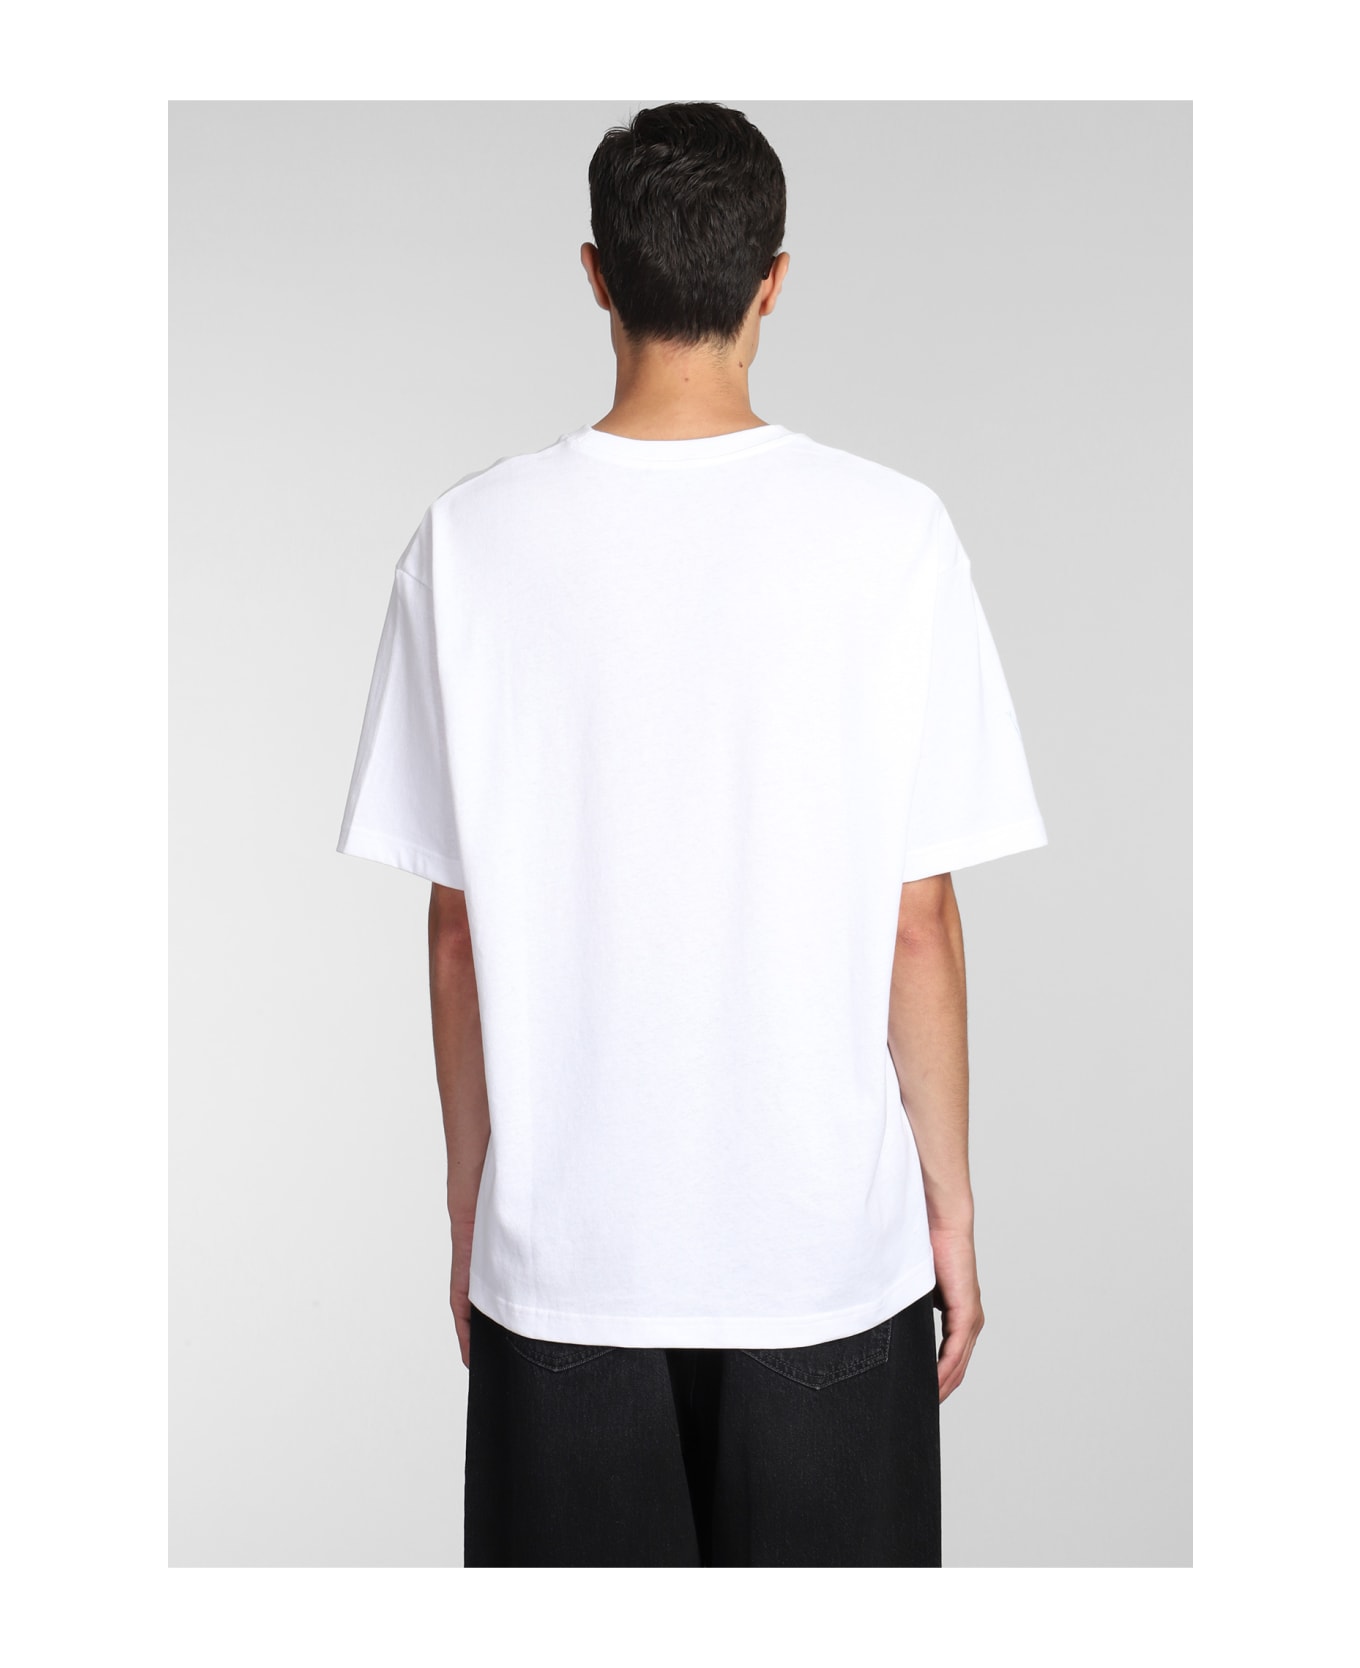 Acne Studios T-shirt - white